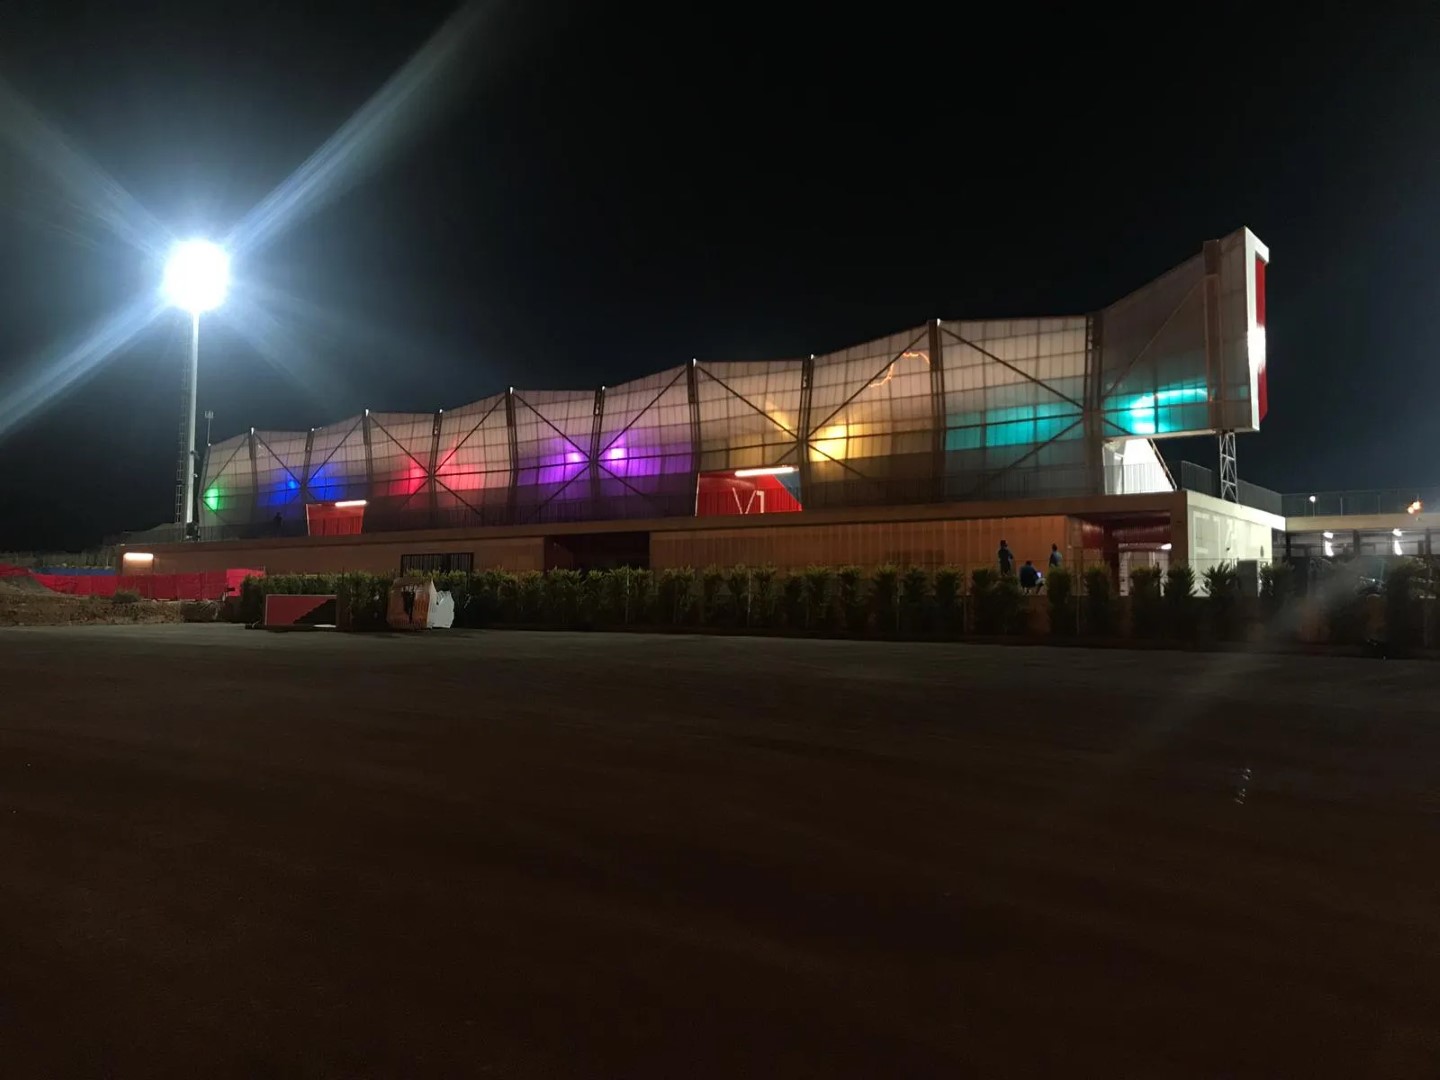 Estadio Olimpico Camilo Cano - Eiffage Infraestructuras